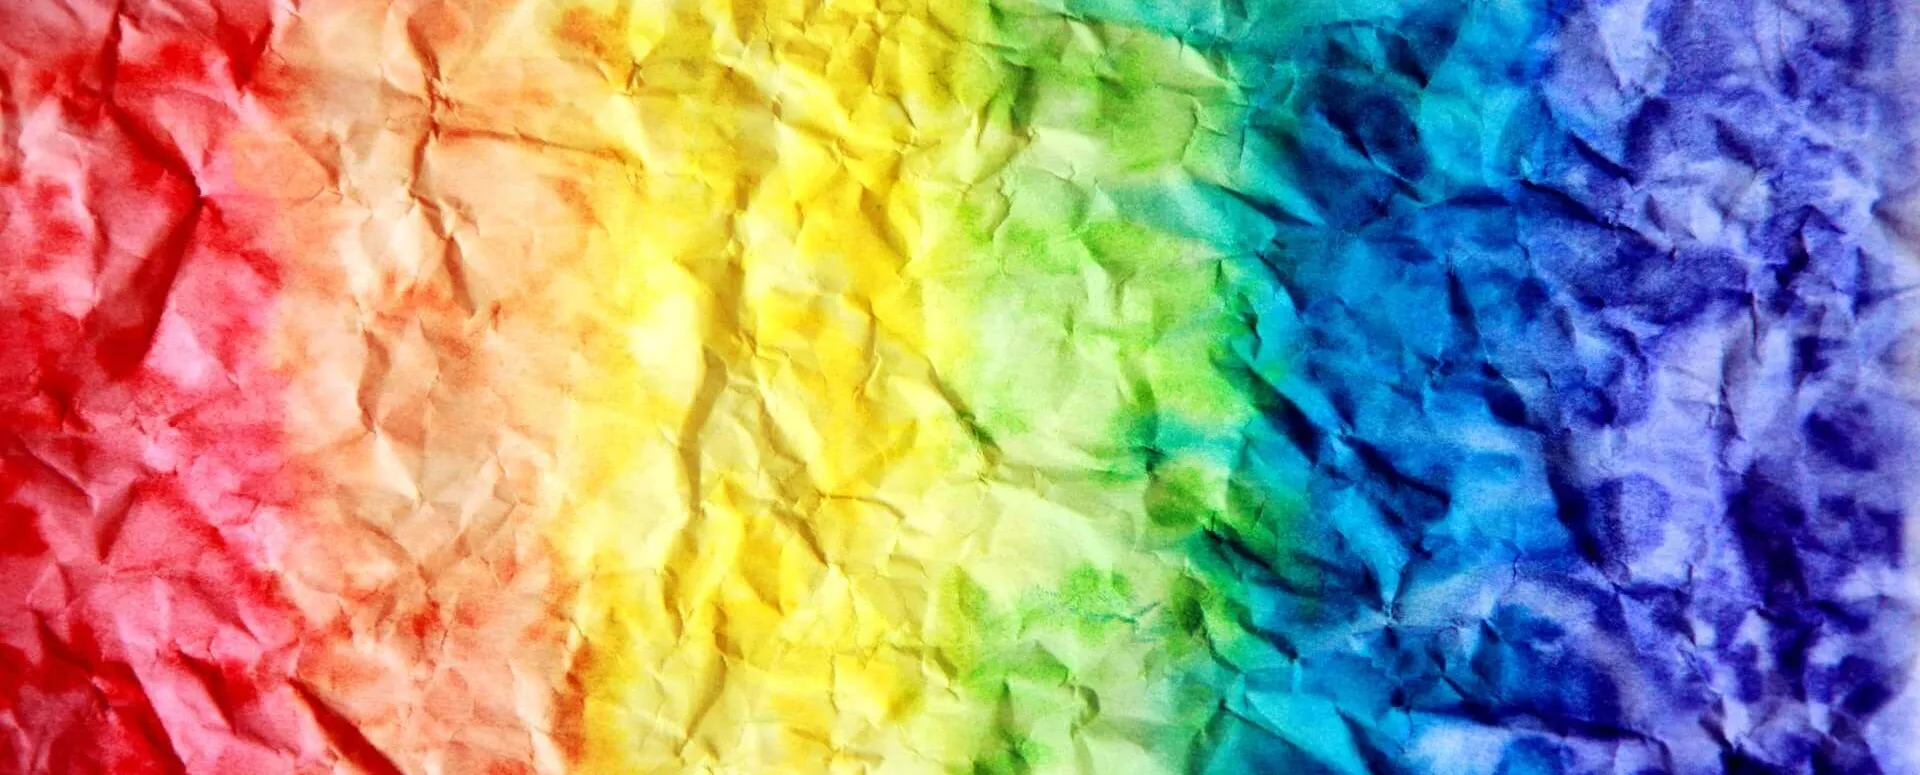 Rainbow pride background image